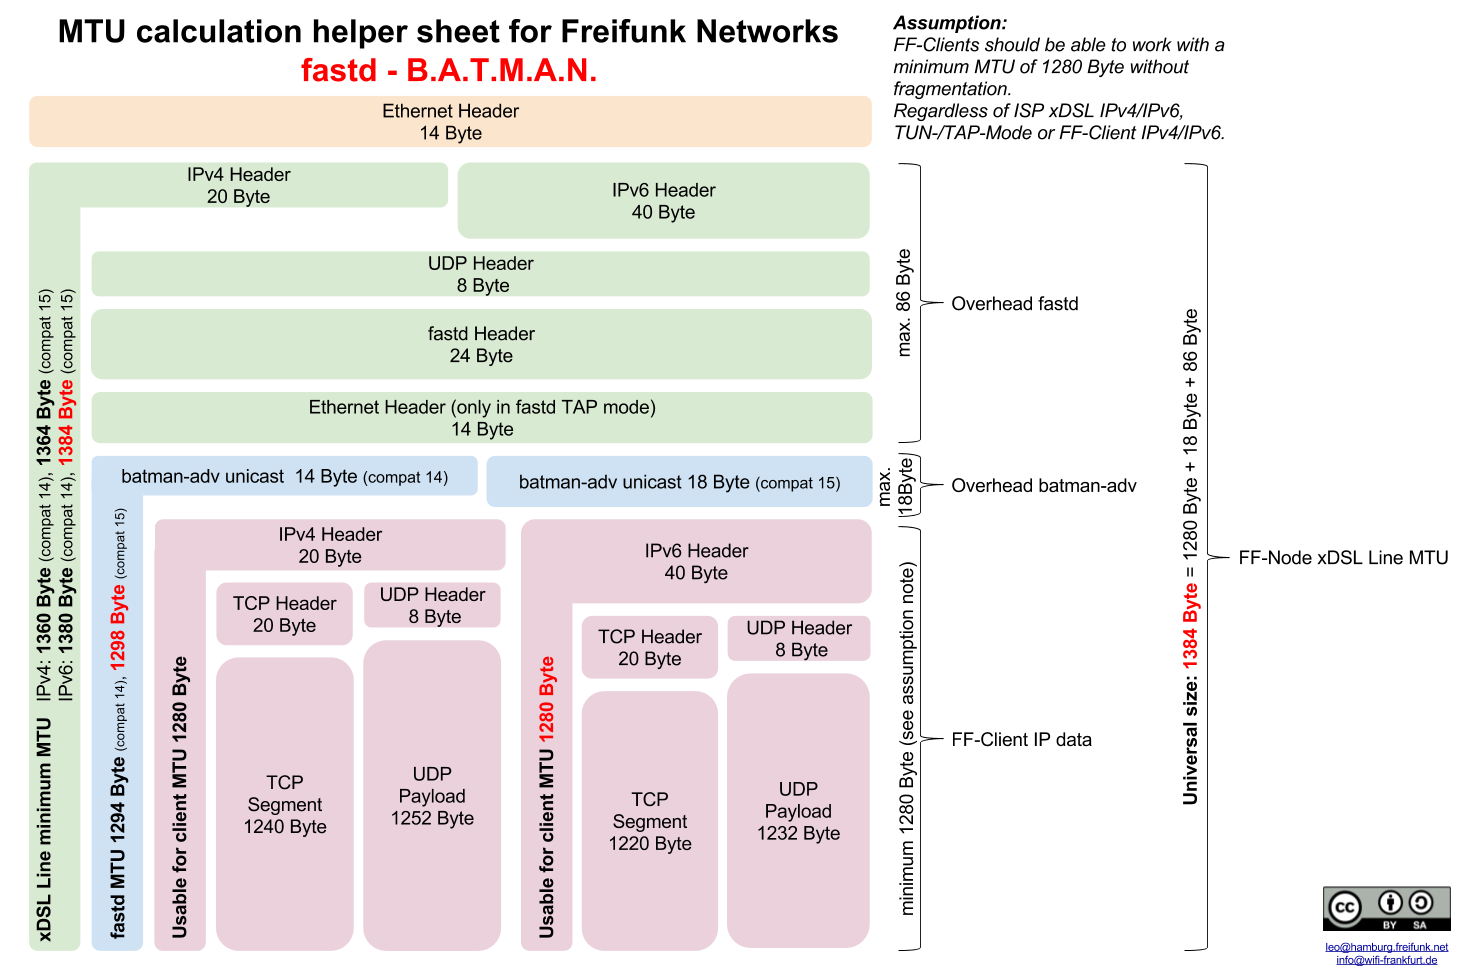 _images/MTU-calculation-helper-sheet-for-Freifunk-Networks.png